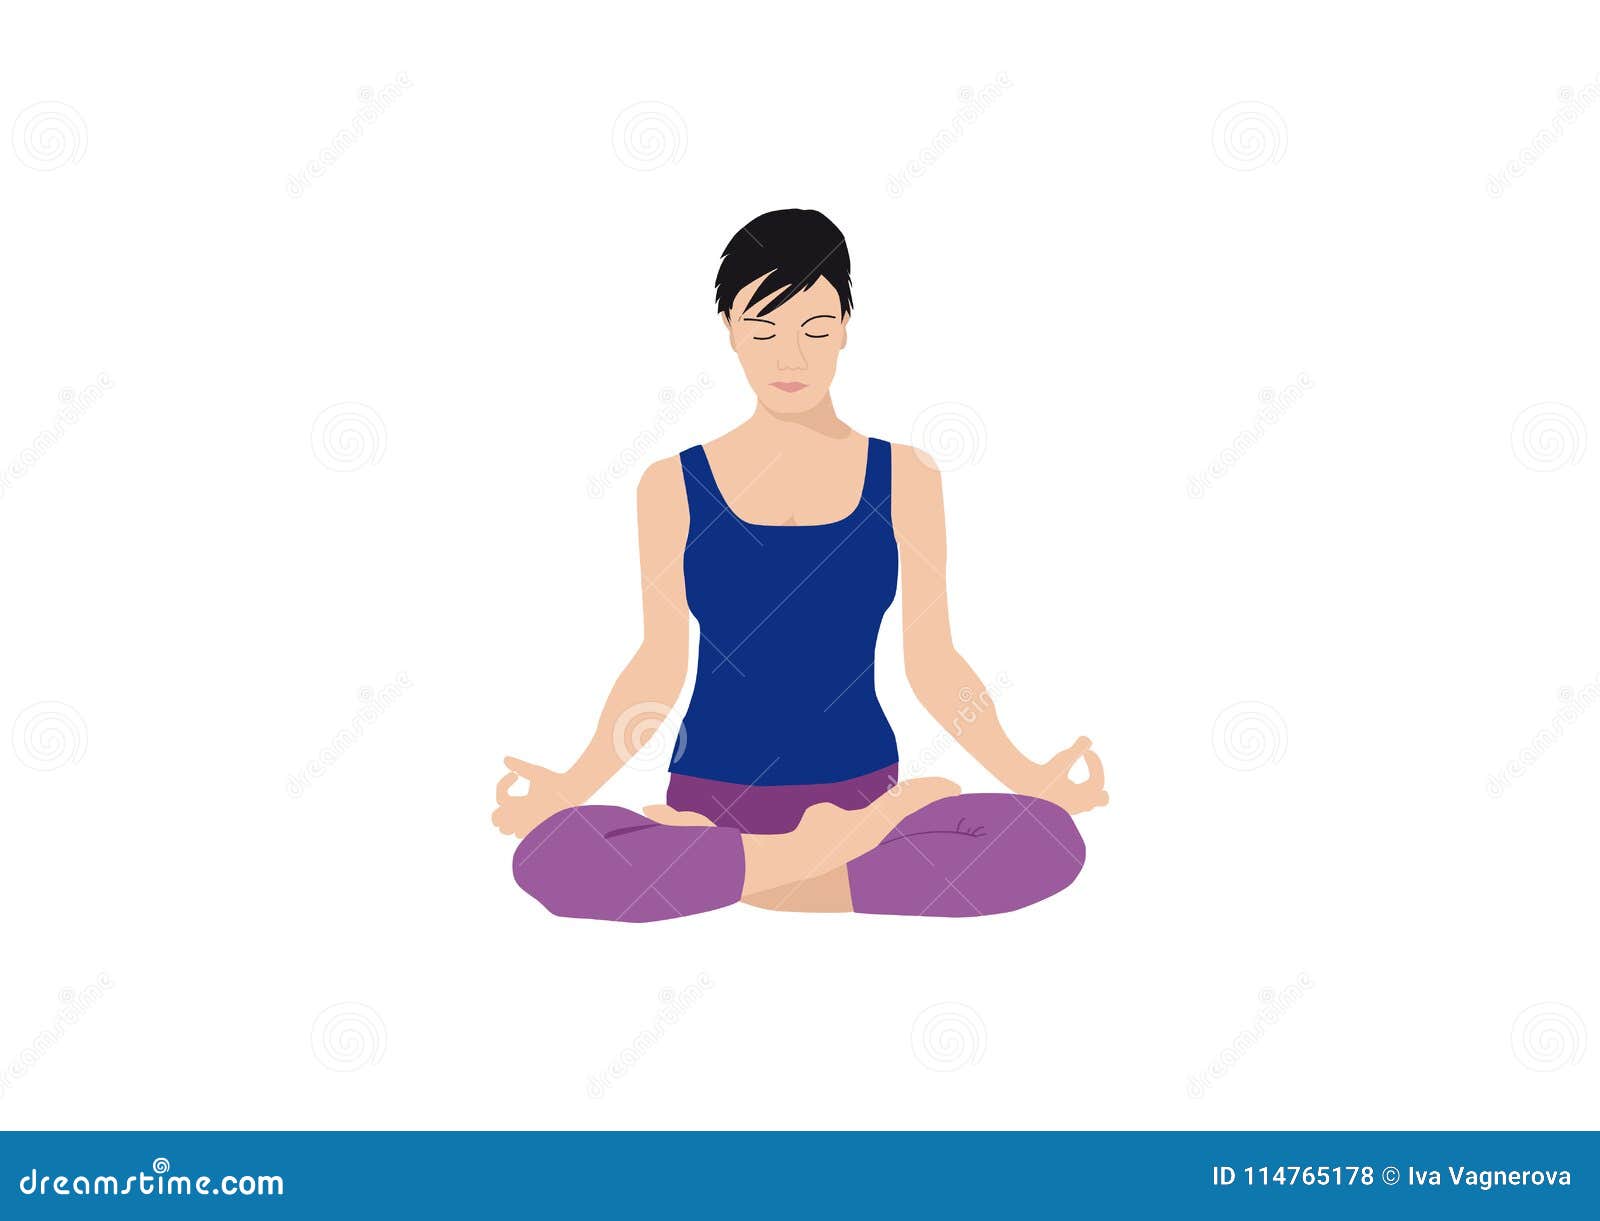 Preparing the Body and Mind for Padmasana - Yoga Vastu